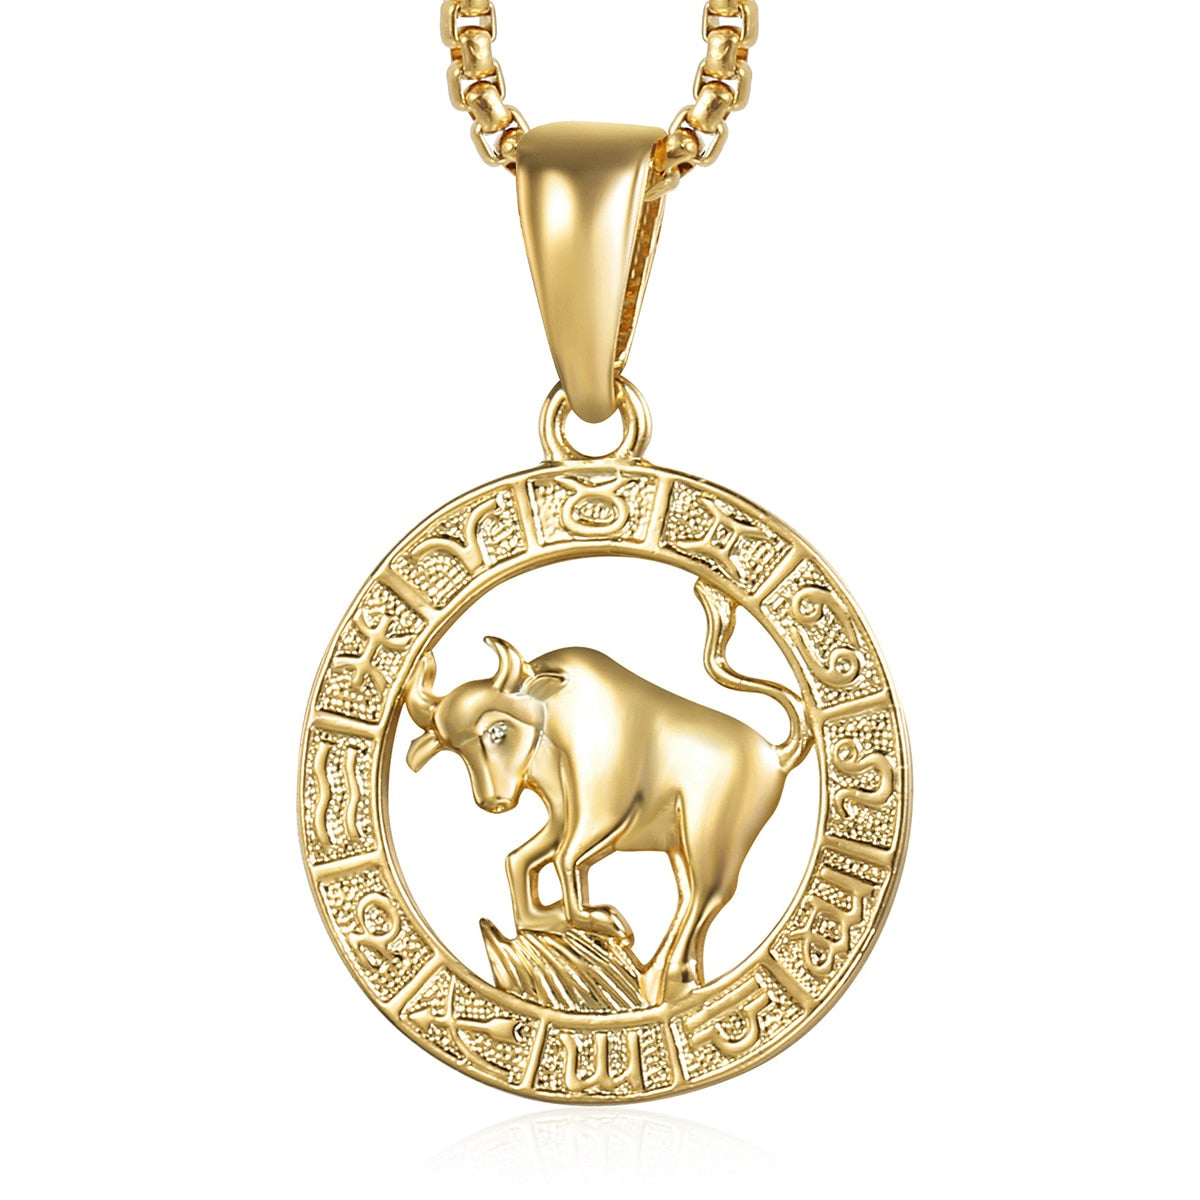 Zodiac Sign Necklace | 12 Constellation Pendants For Spiritual Men & Women | Silver & Gold-Plated Astrology Jewelry | Apollo Tarot Shop